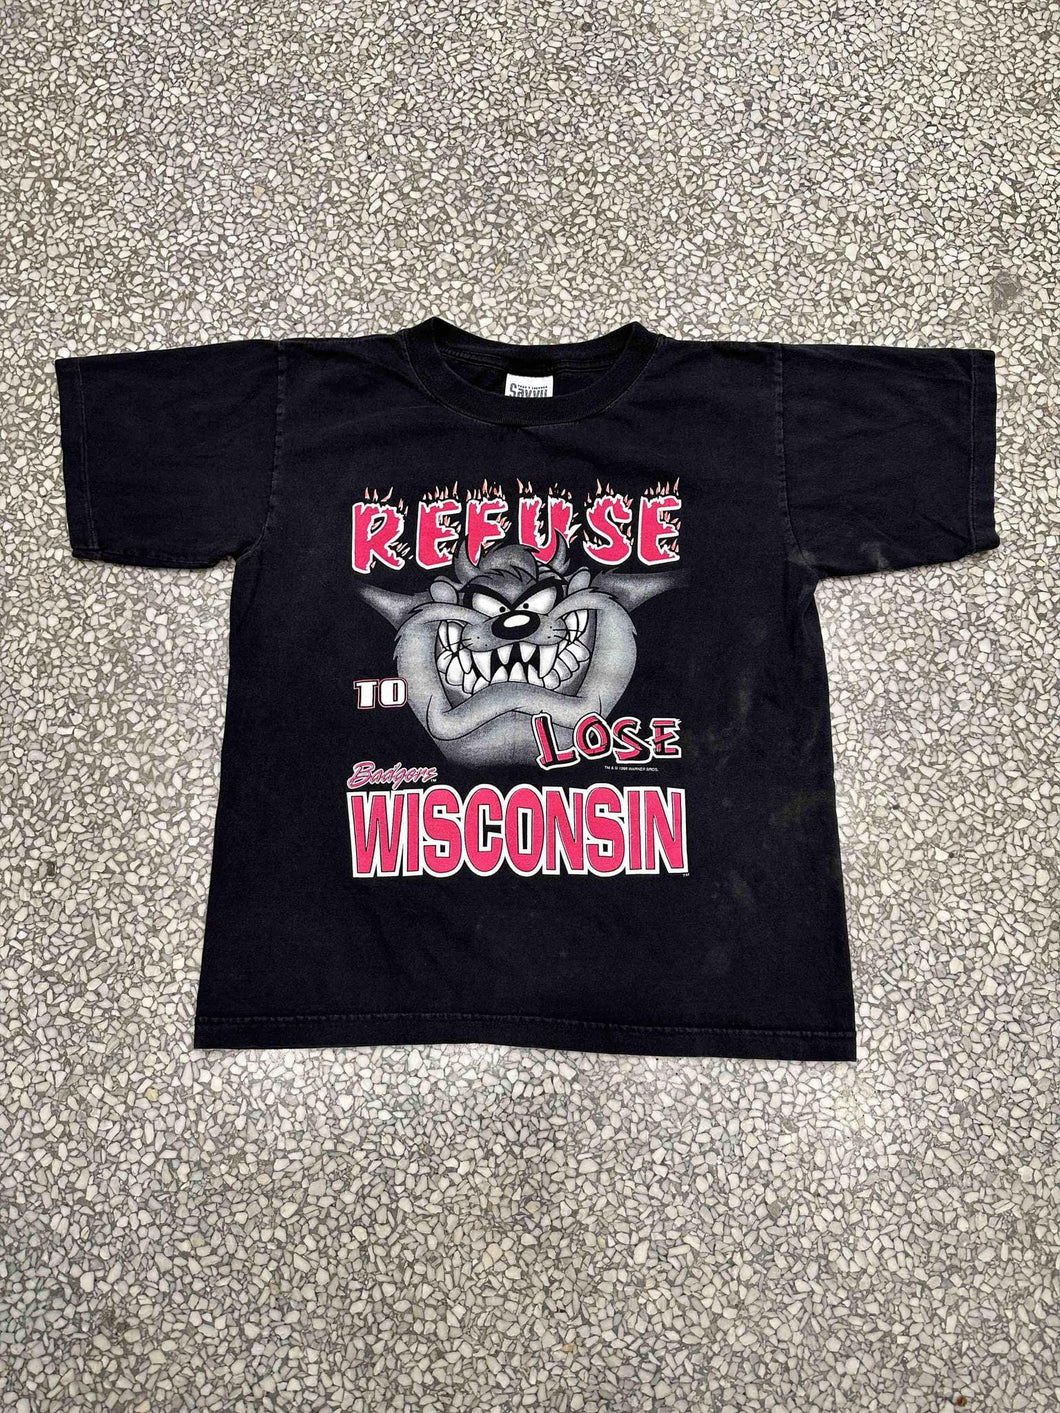 Wisconsin Badgers Vintage 1996 Taz Refuse To Lose ABC Vintage 